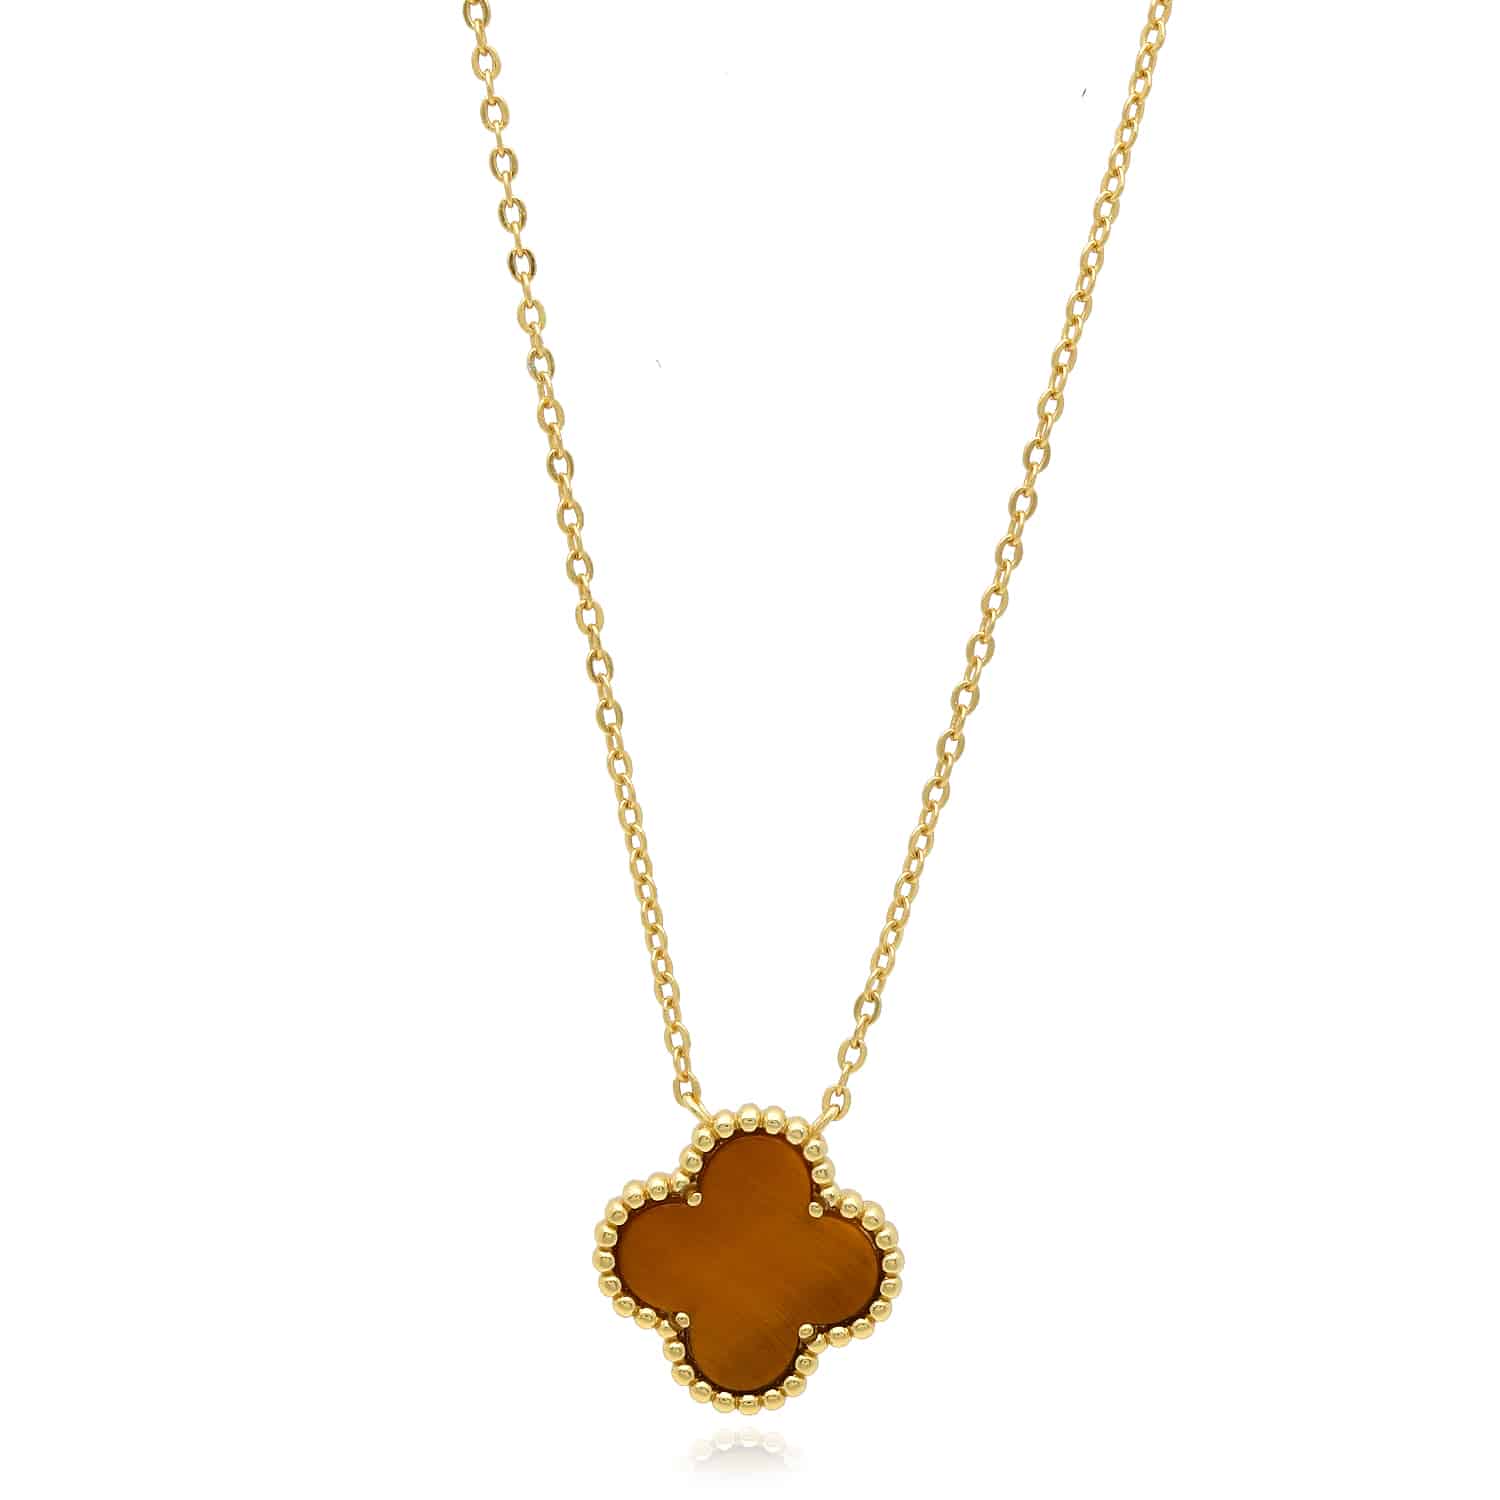 Yellow Gold Over Silver Gemstone Clover Leaf Pendant Necklace 16"-18" Adjustable - Tiger's Eye